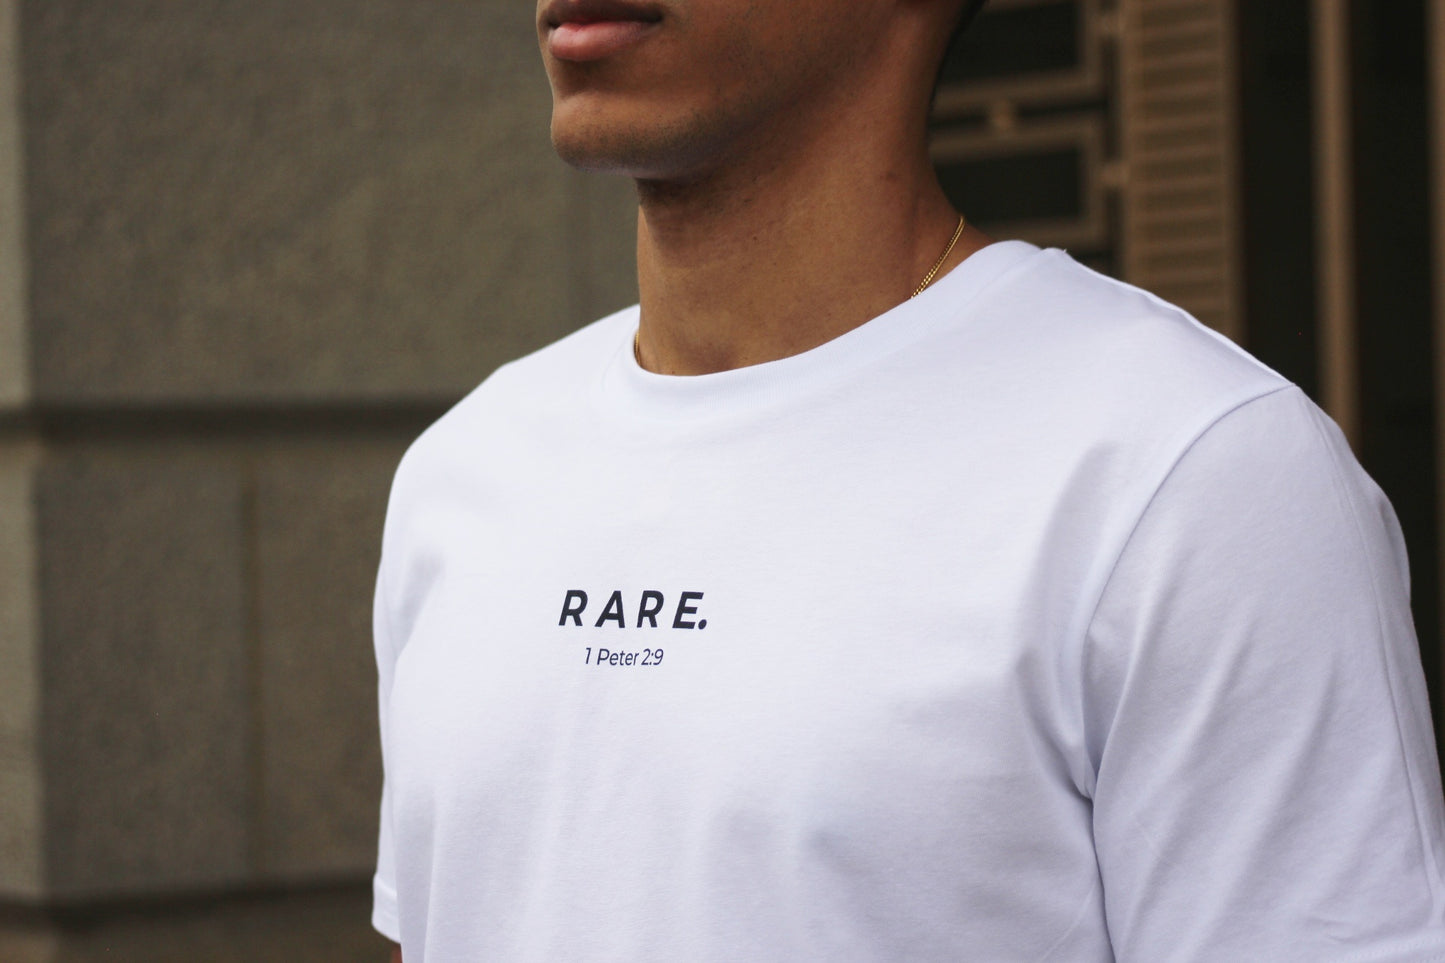 Rare - T Shirt